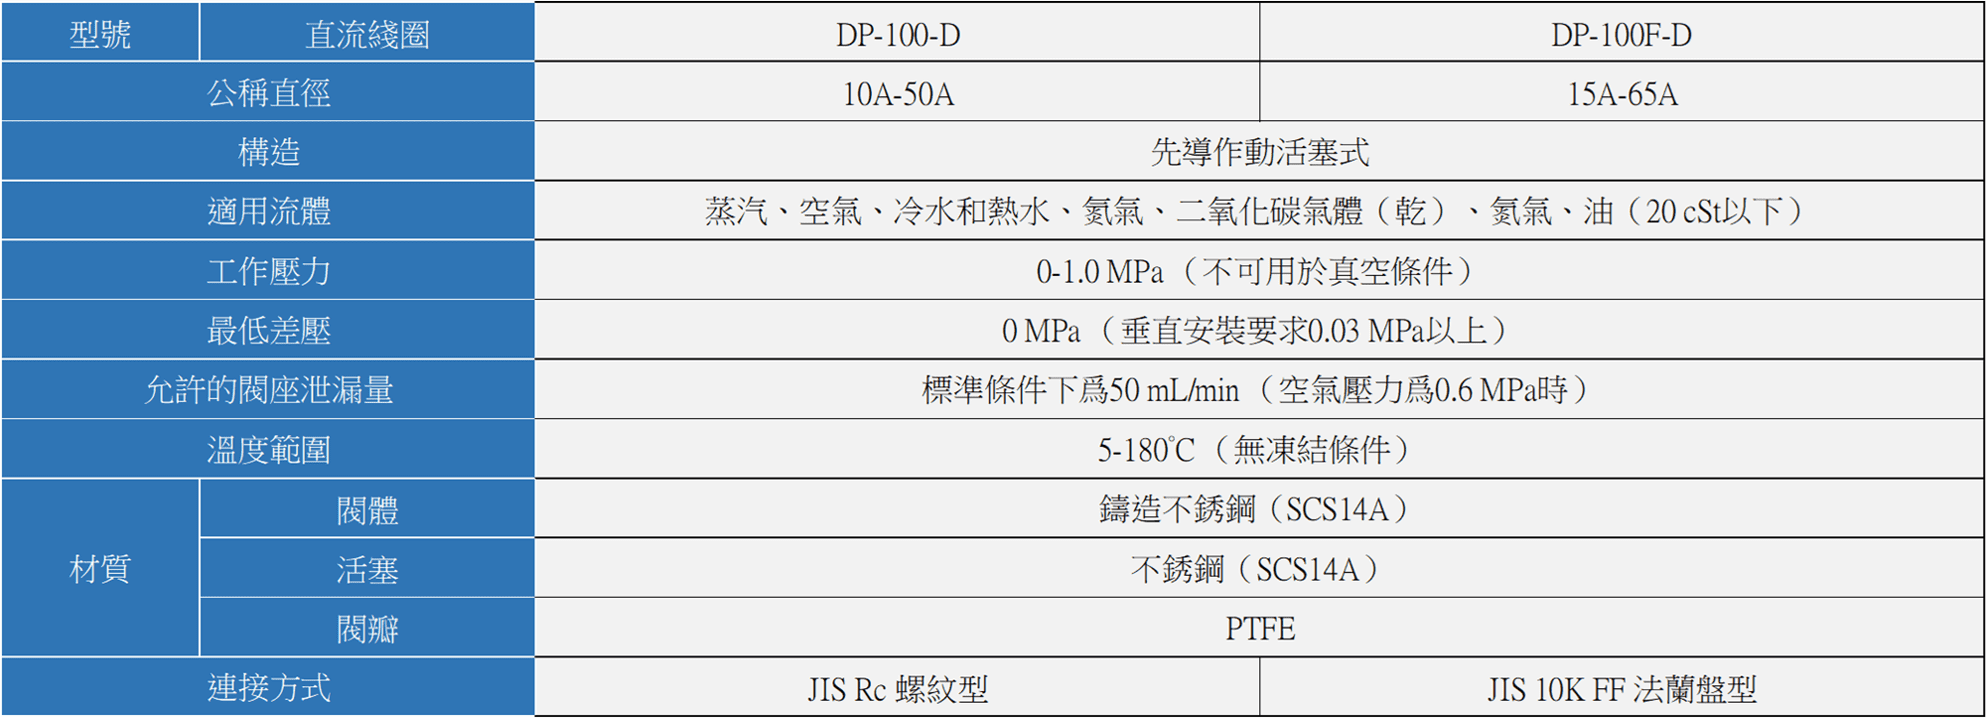 YOSHITAKE -電磁閥規格- DP-100-D/ 100F-D 系列